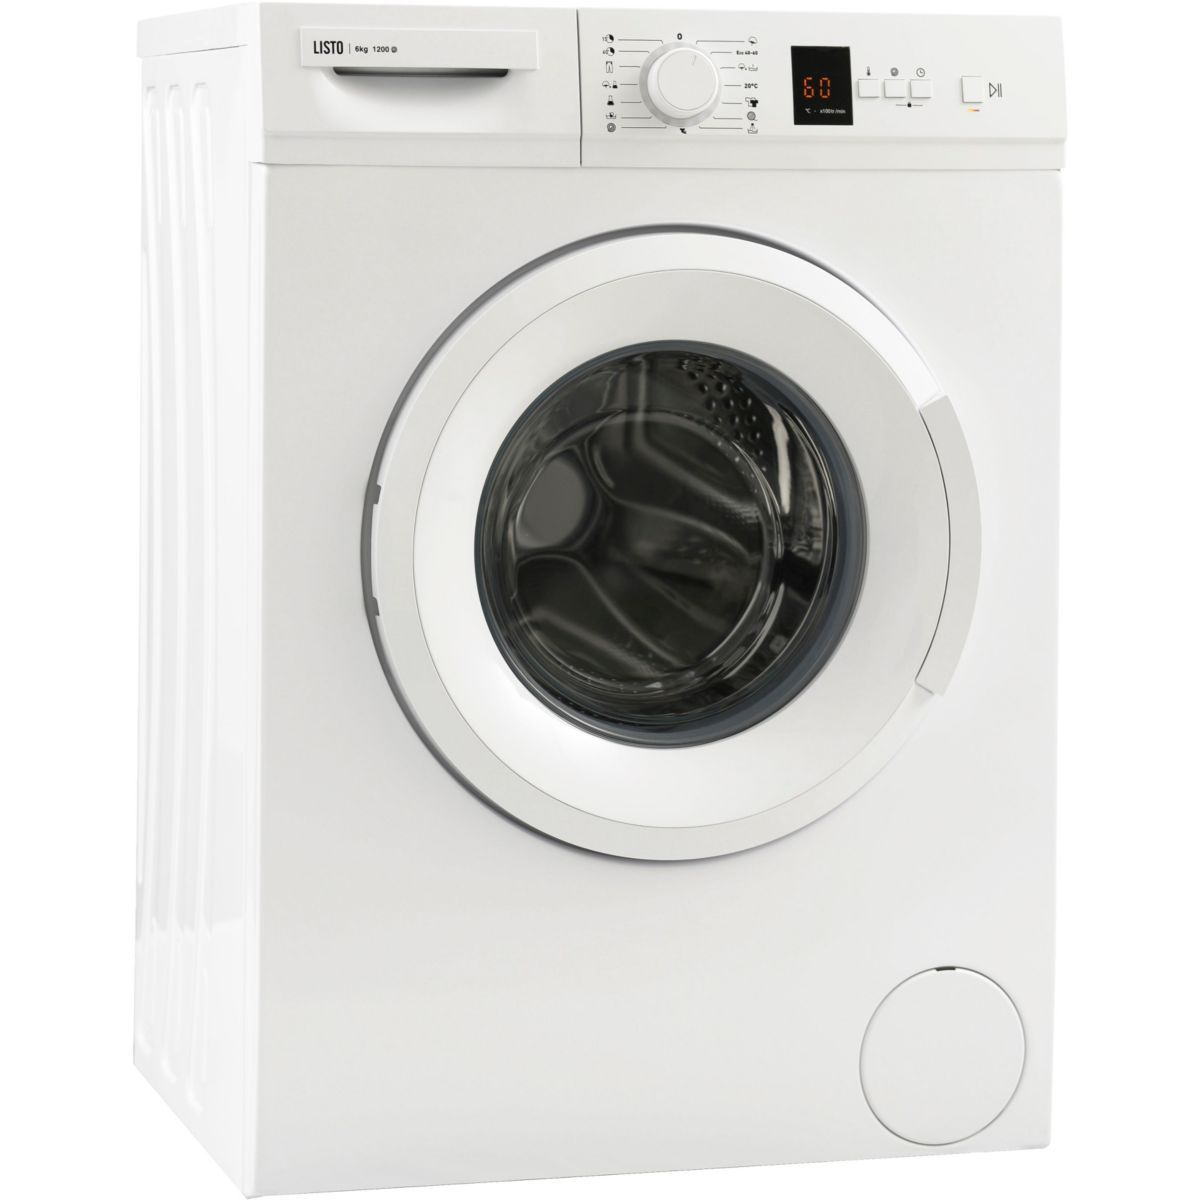 Mini machine à laver Petite machine à laver Petit lave-linge 5 kg 280 W